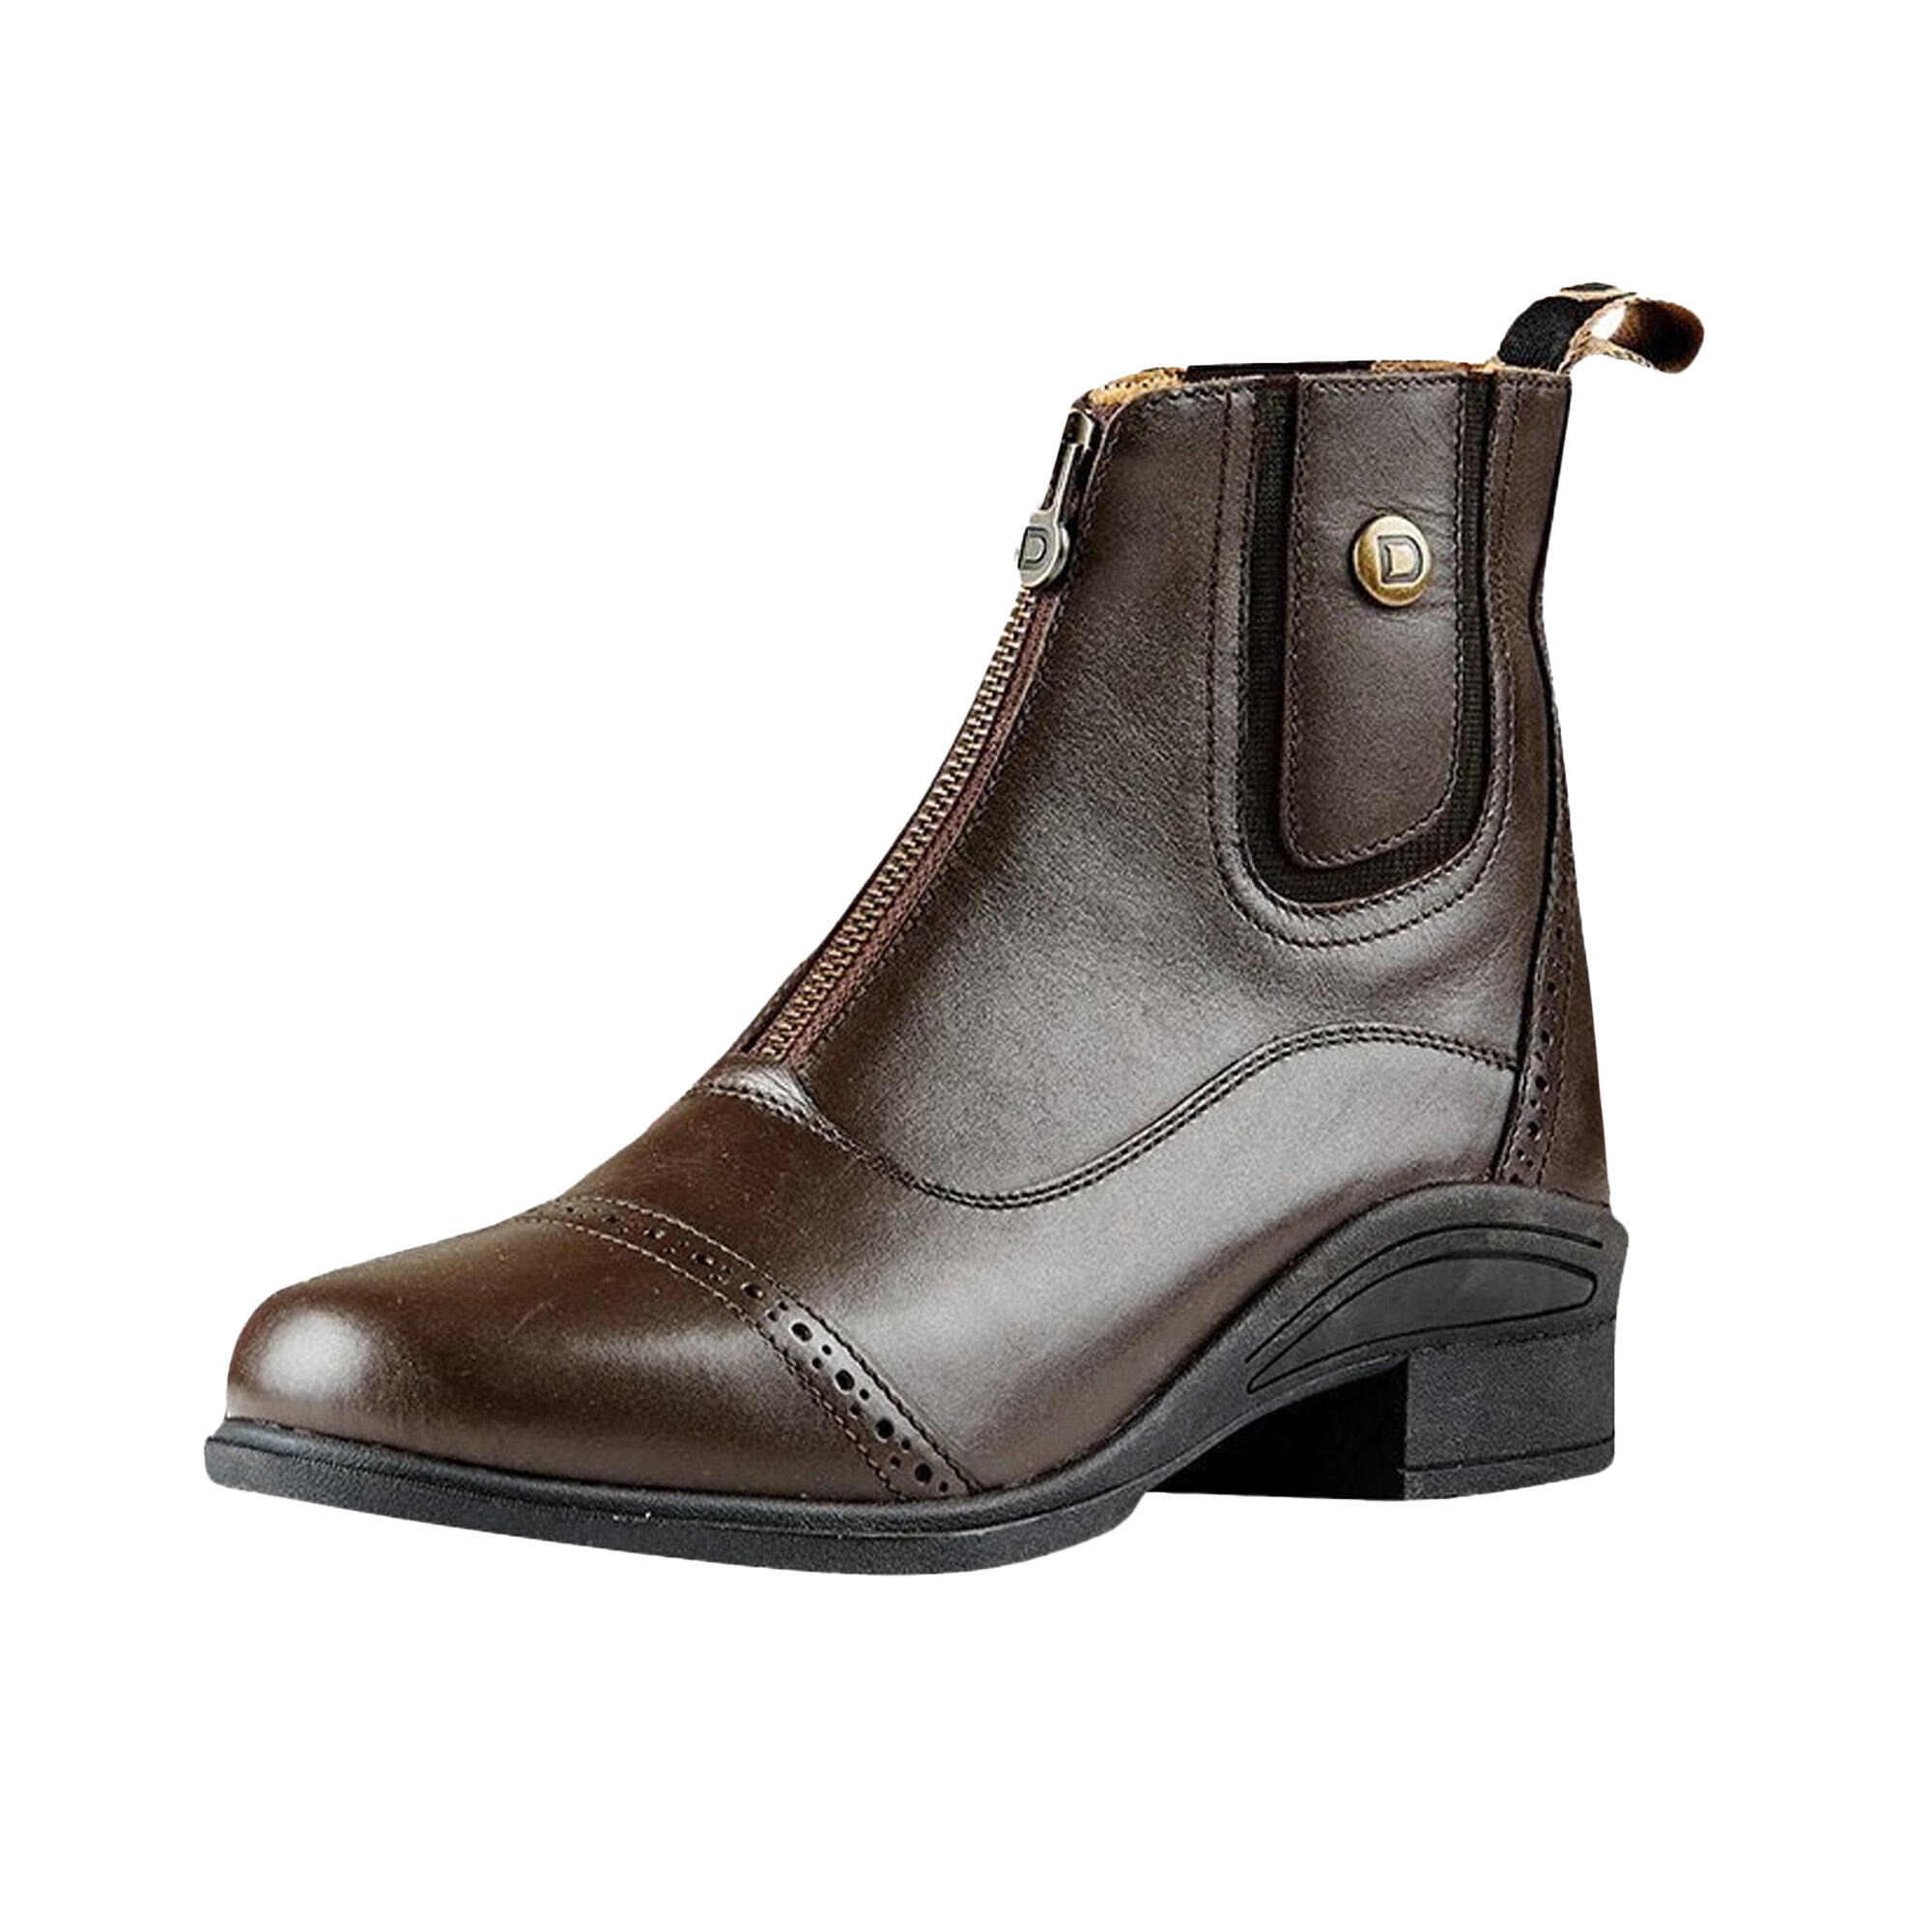 DUBLIN Unisex Adult Rapture Leather Boots (Brown)